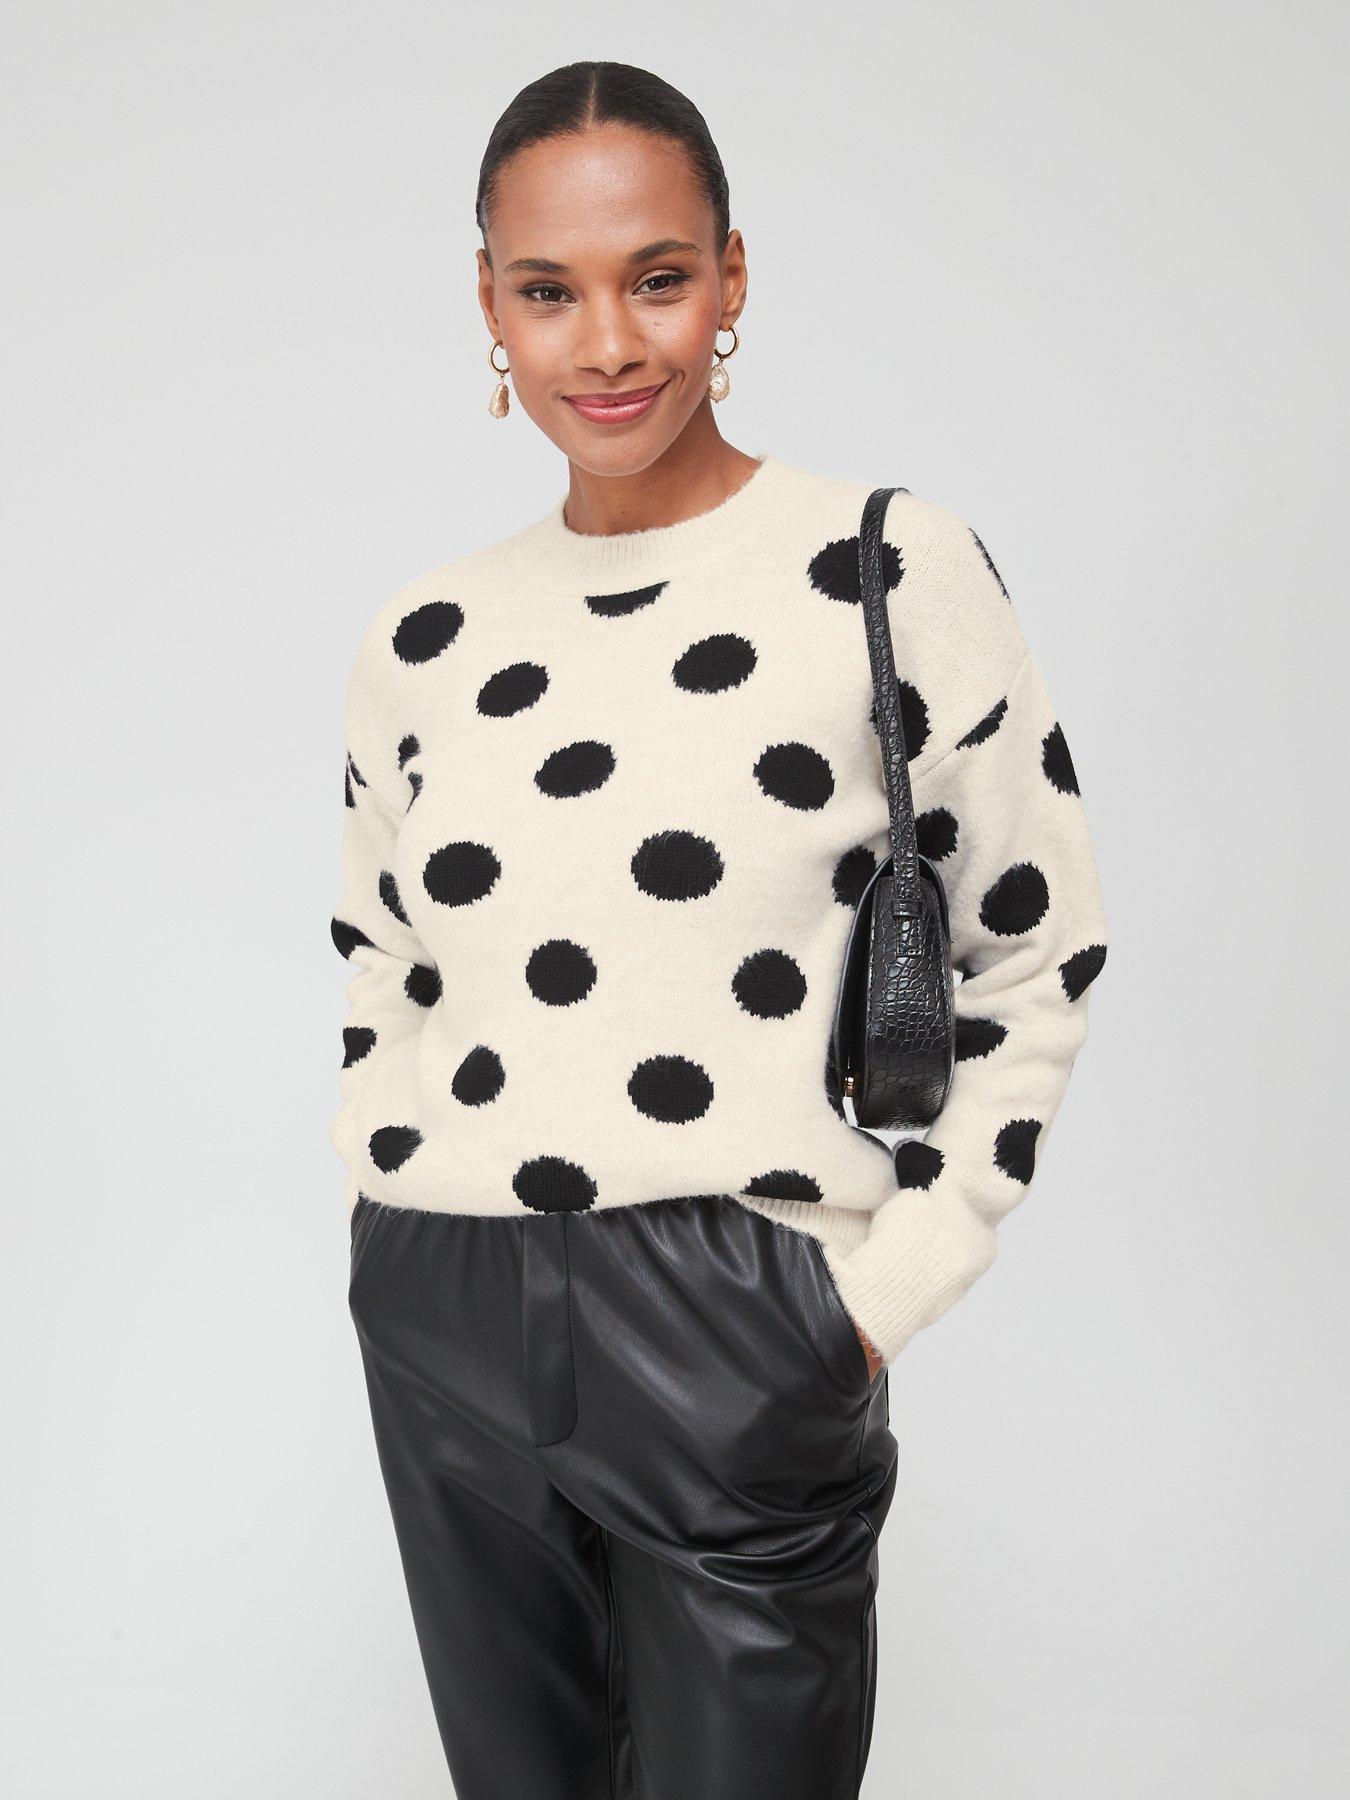 discount 63% Primark jumper Gray 44                  EU WOMEN FASHION Jumpers & Sweatshirts Sequin 